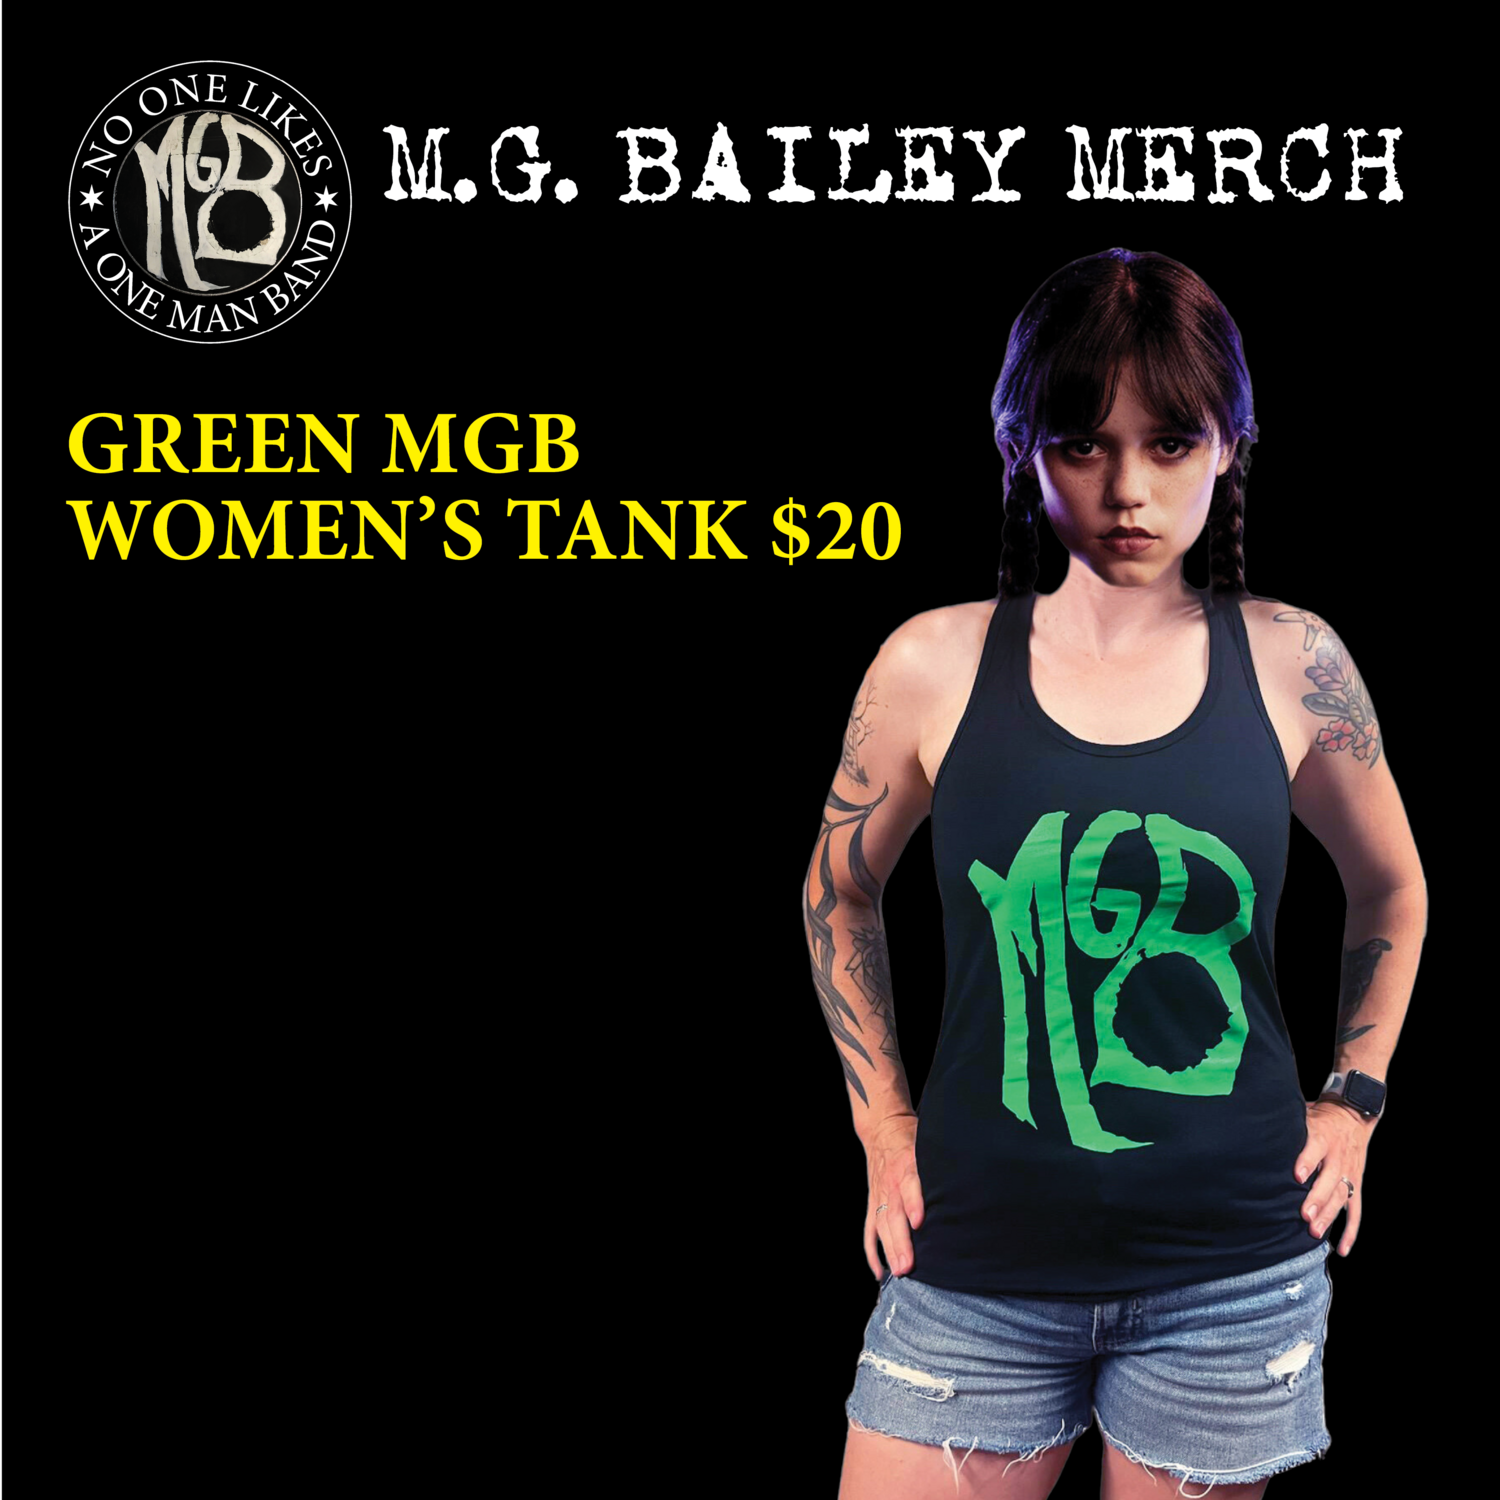 Green MGB Women's Tank